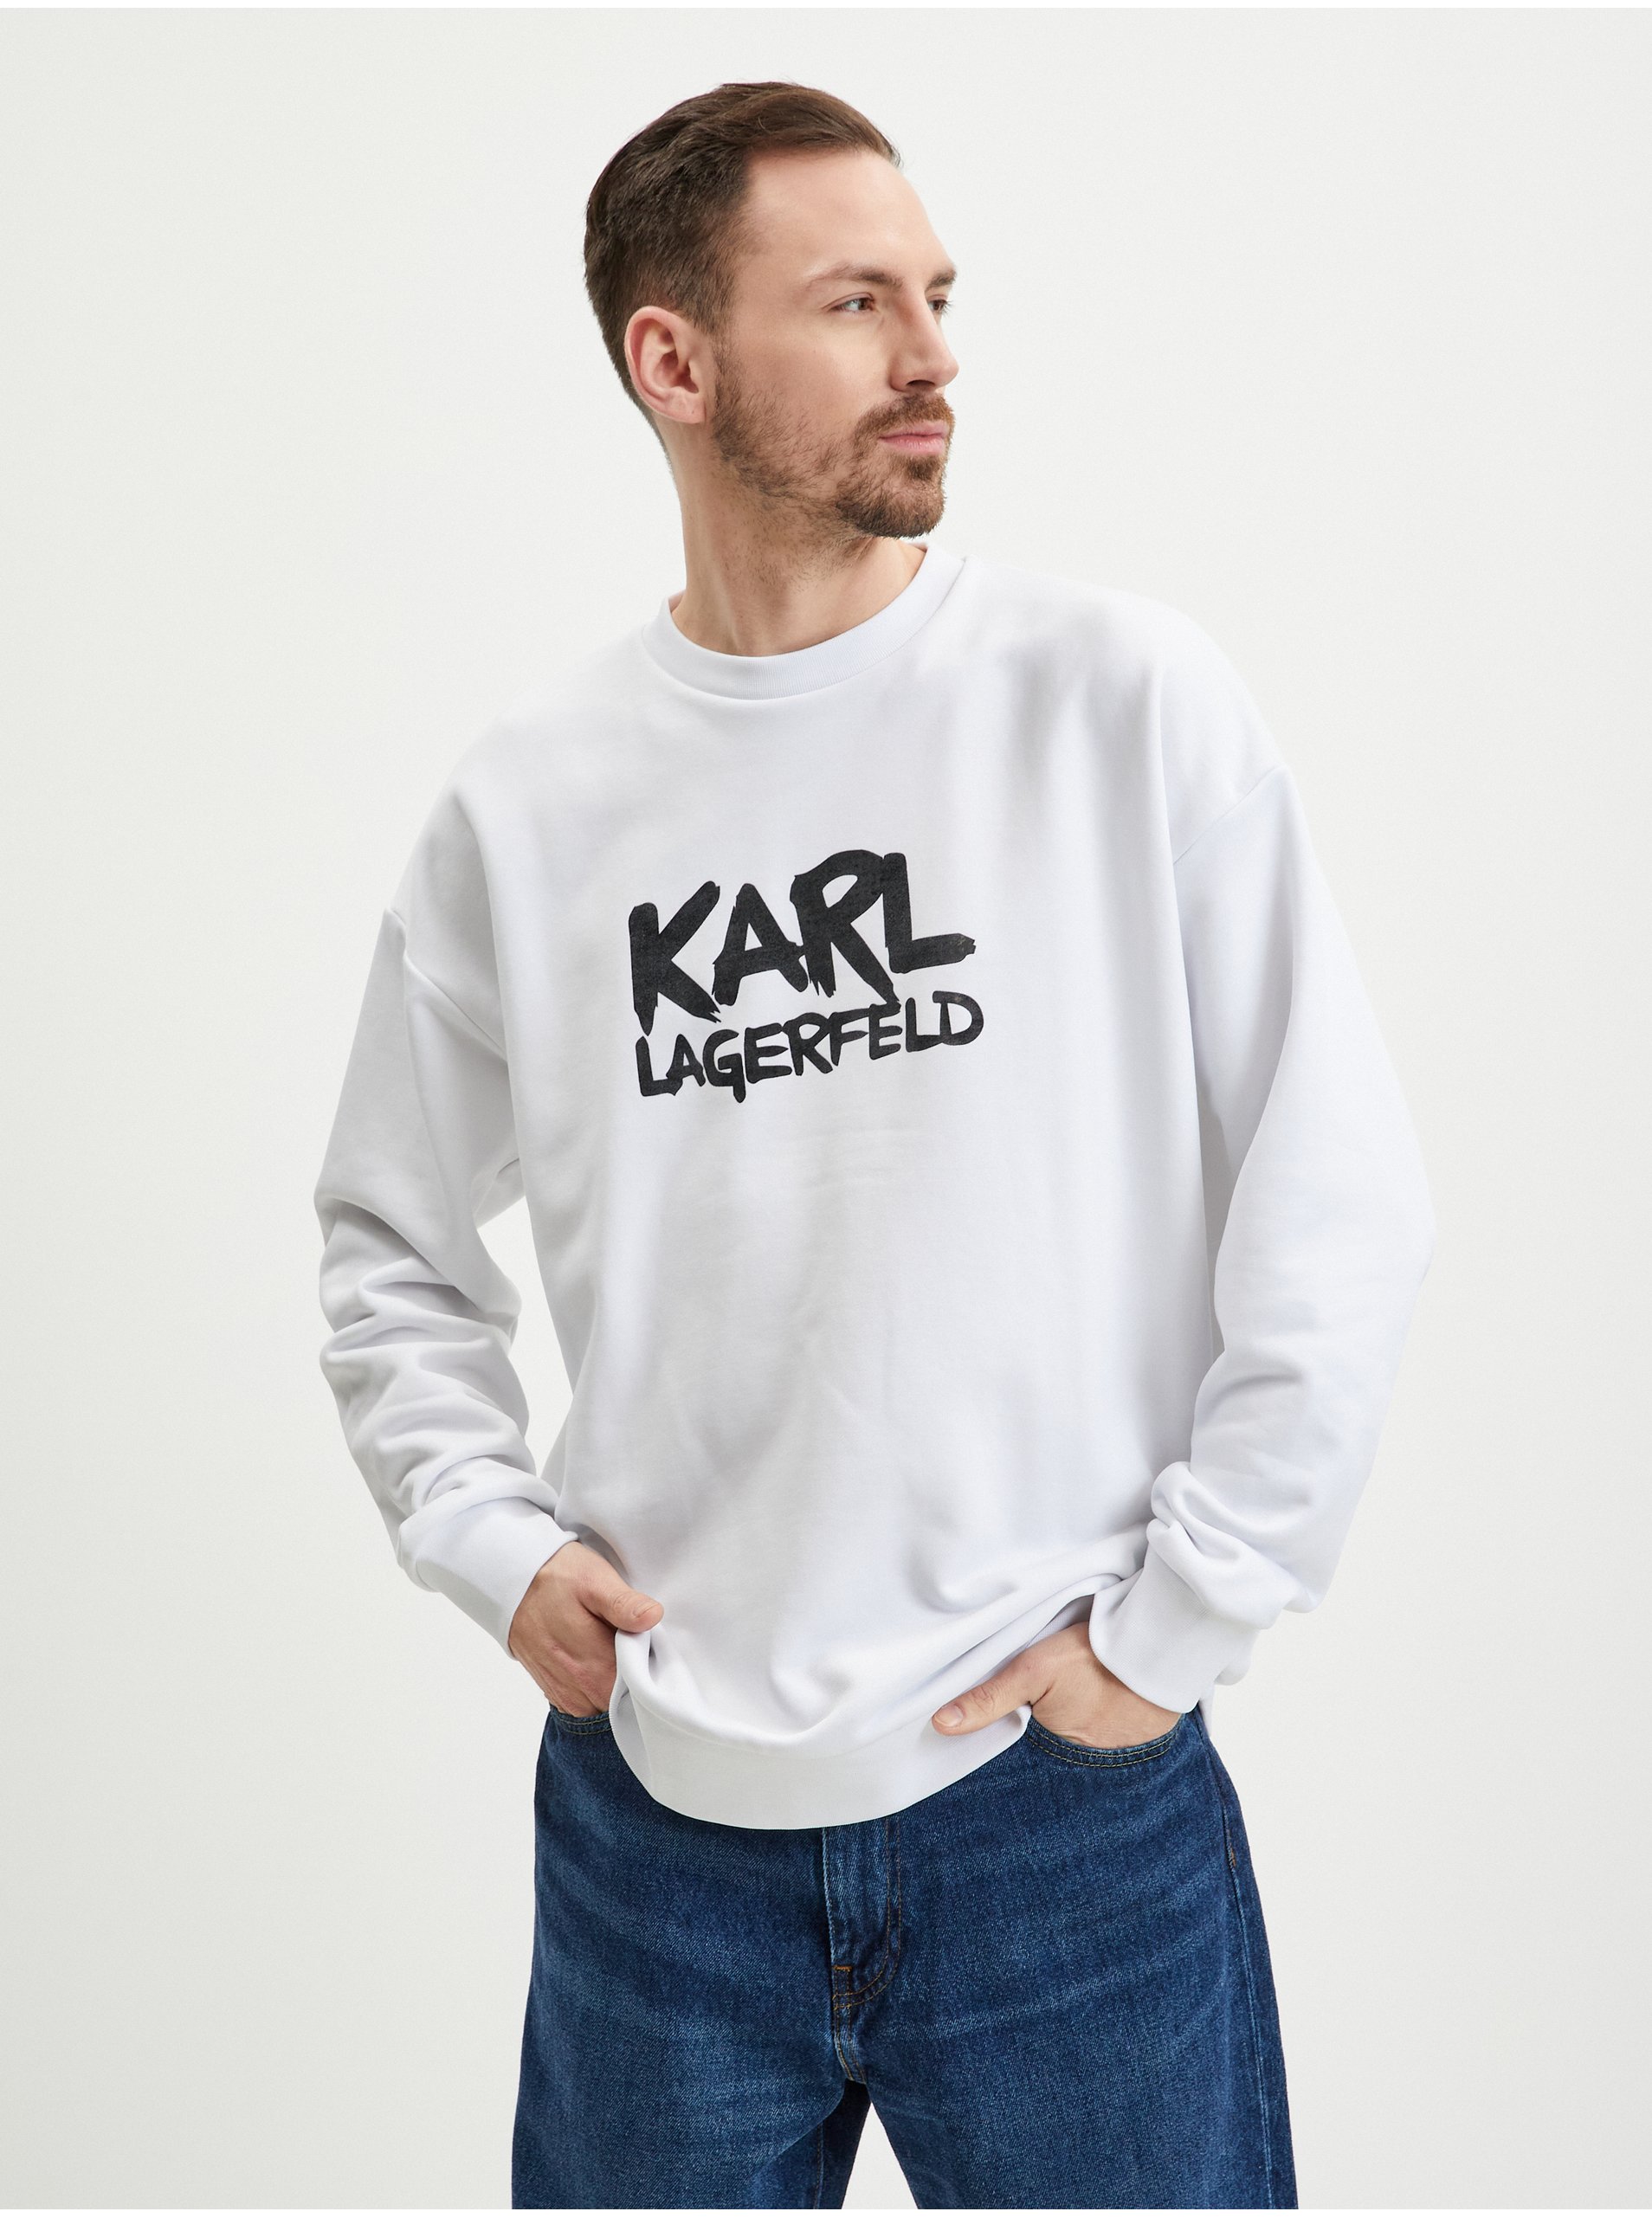 White Men's Sweatshirt KARL LAGERFELD - Men